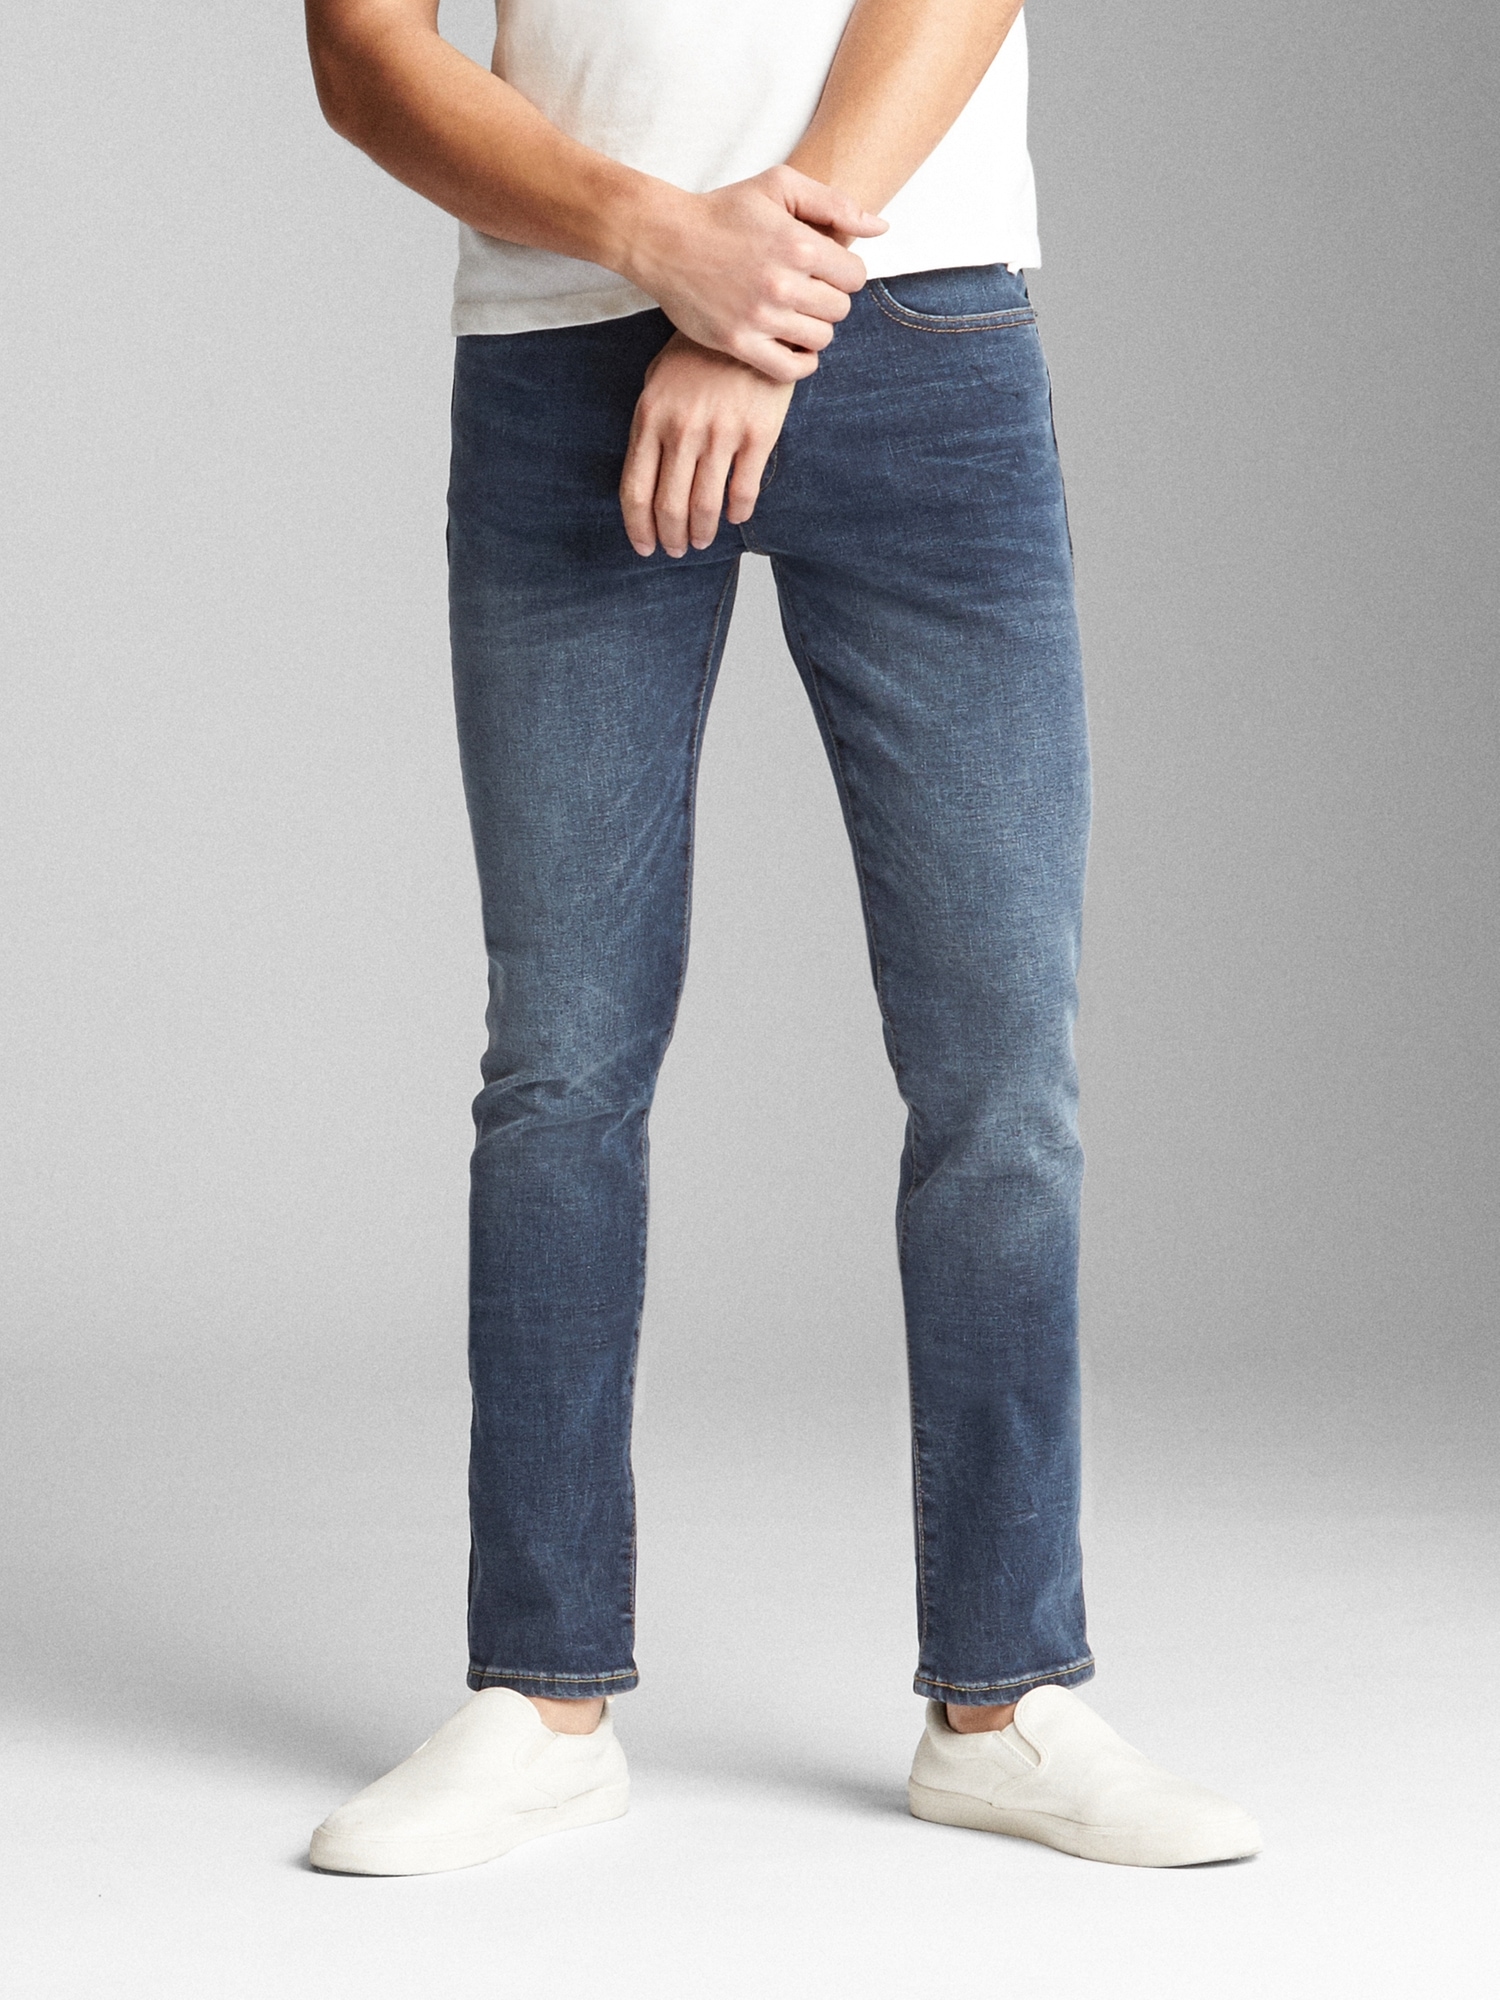 thigh gap skinny jeans